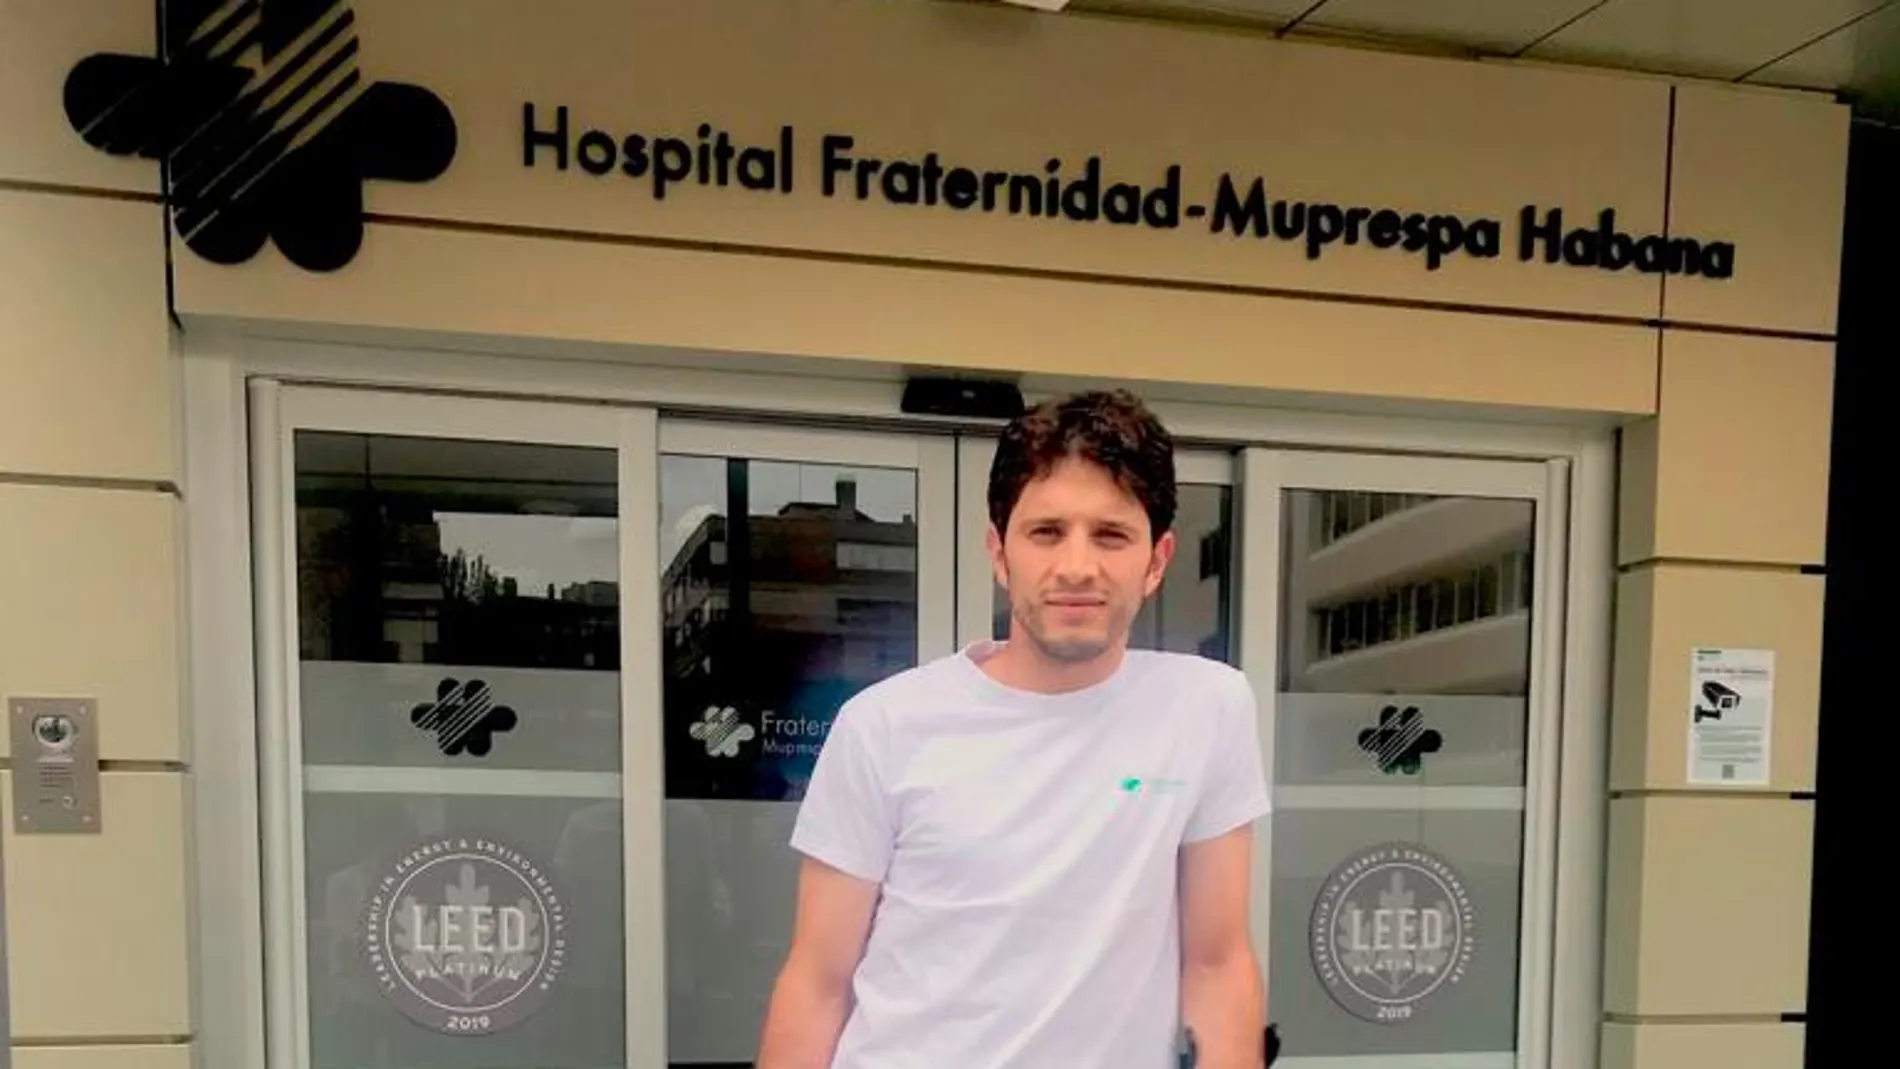 Sebastián Ritter abandona el Hospital Fraternidad - Muprespa Habana